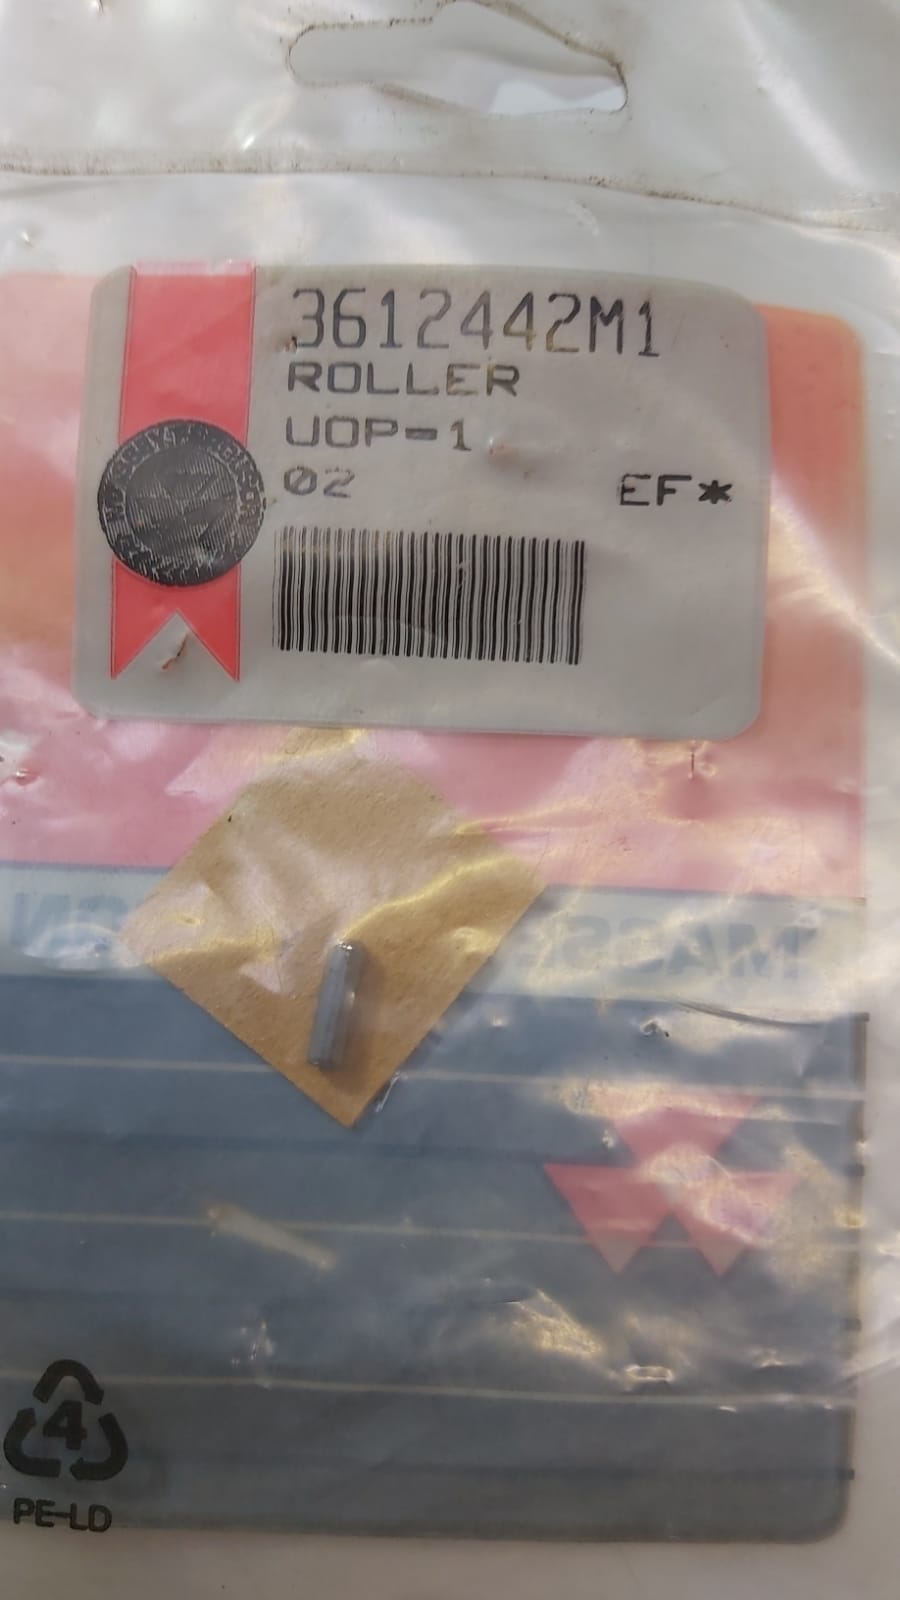 roller-3612442m1